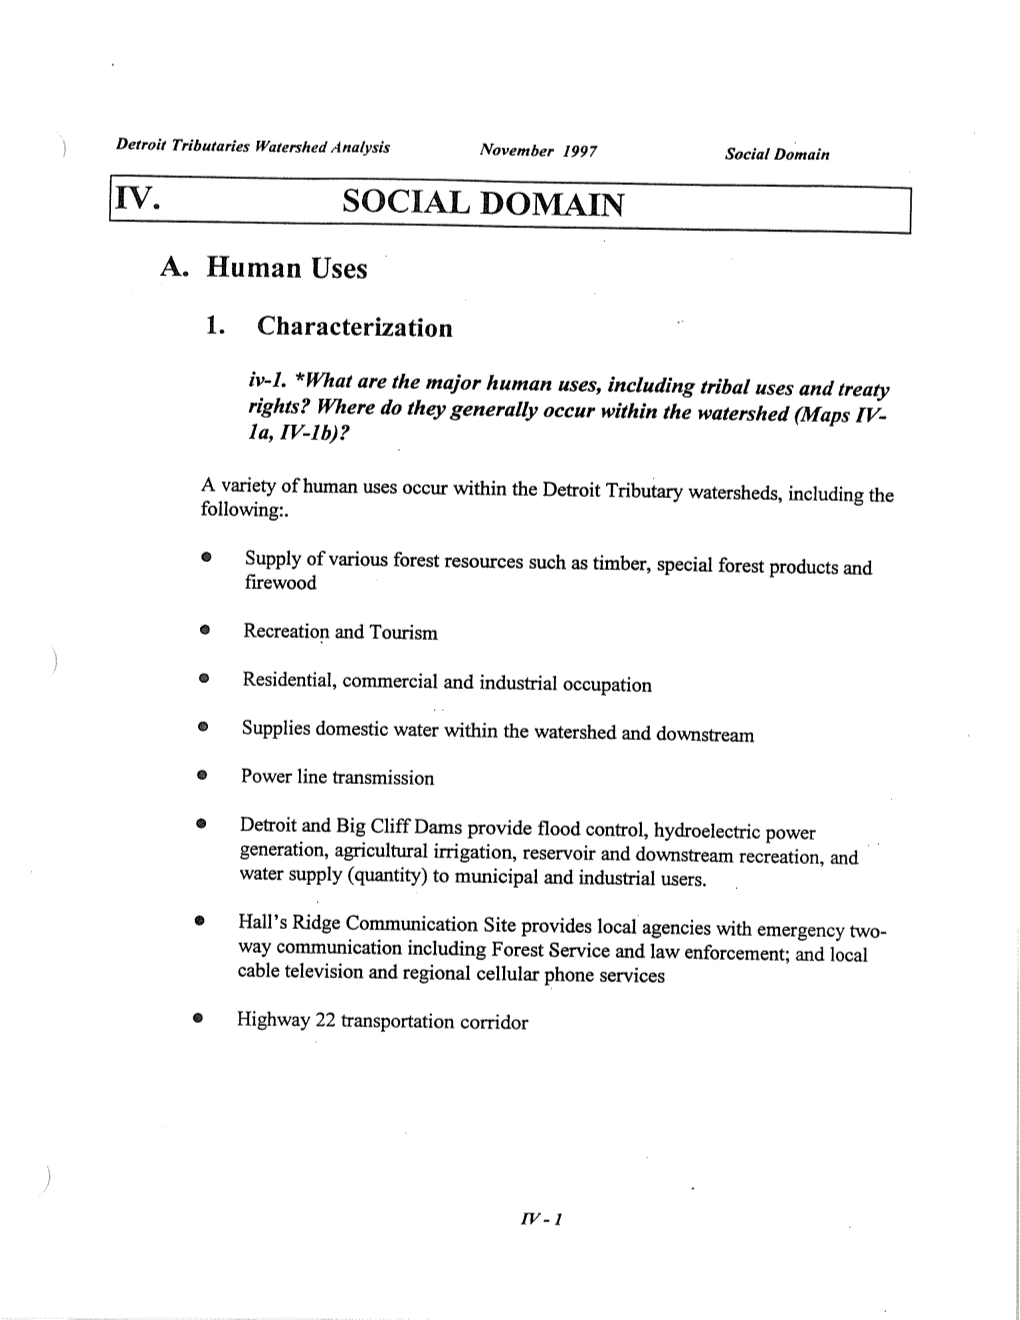 Social Domain IV SOCIAL DOMAIN